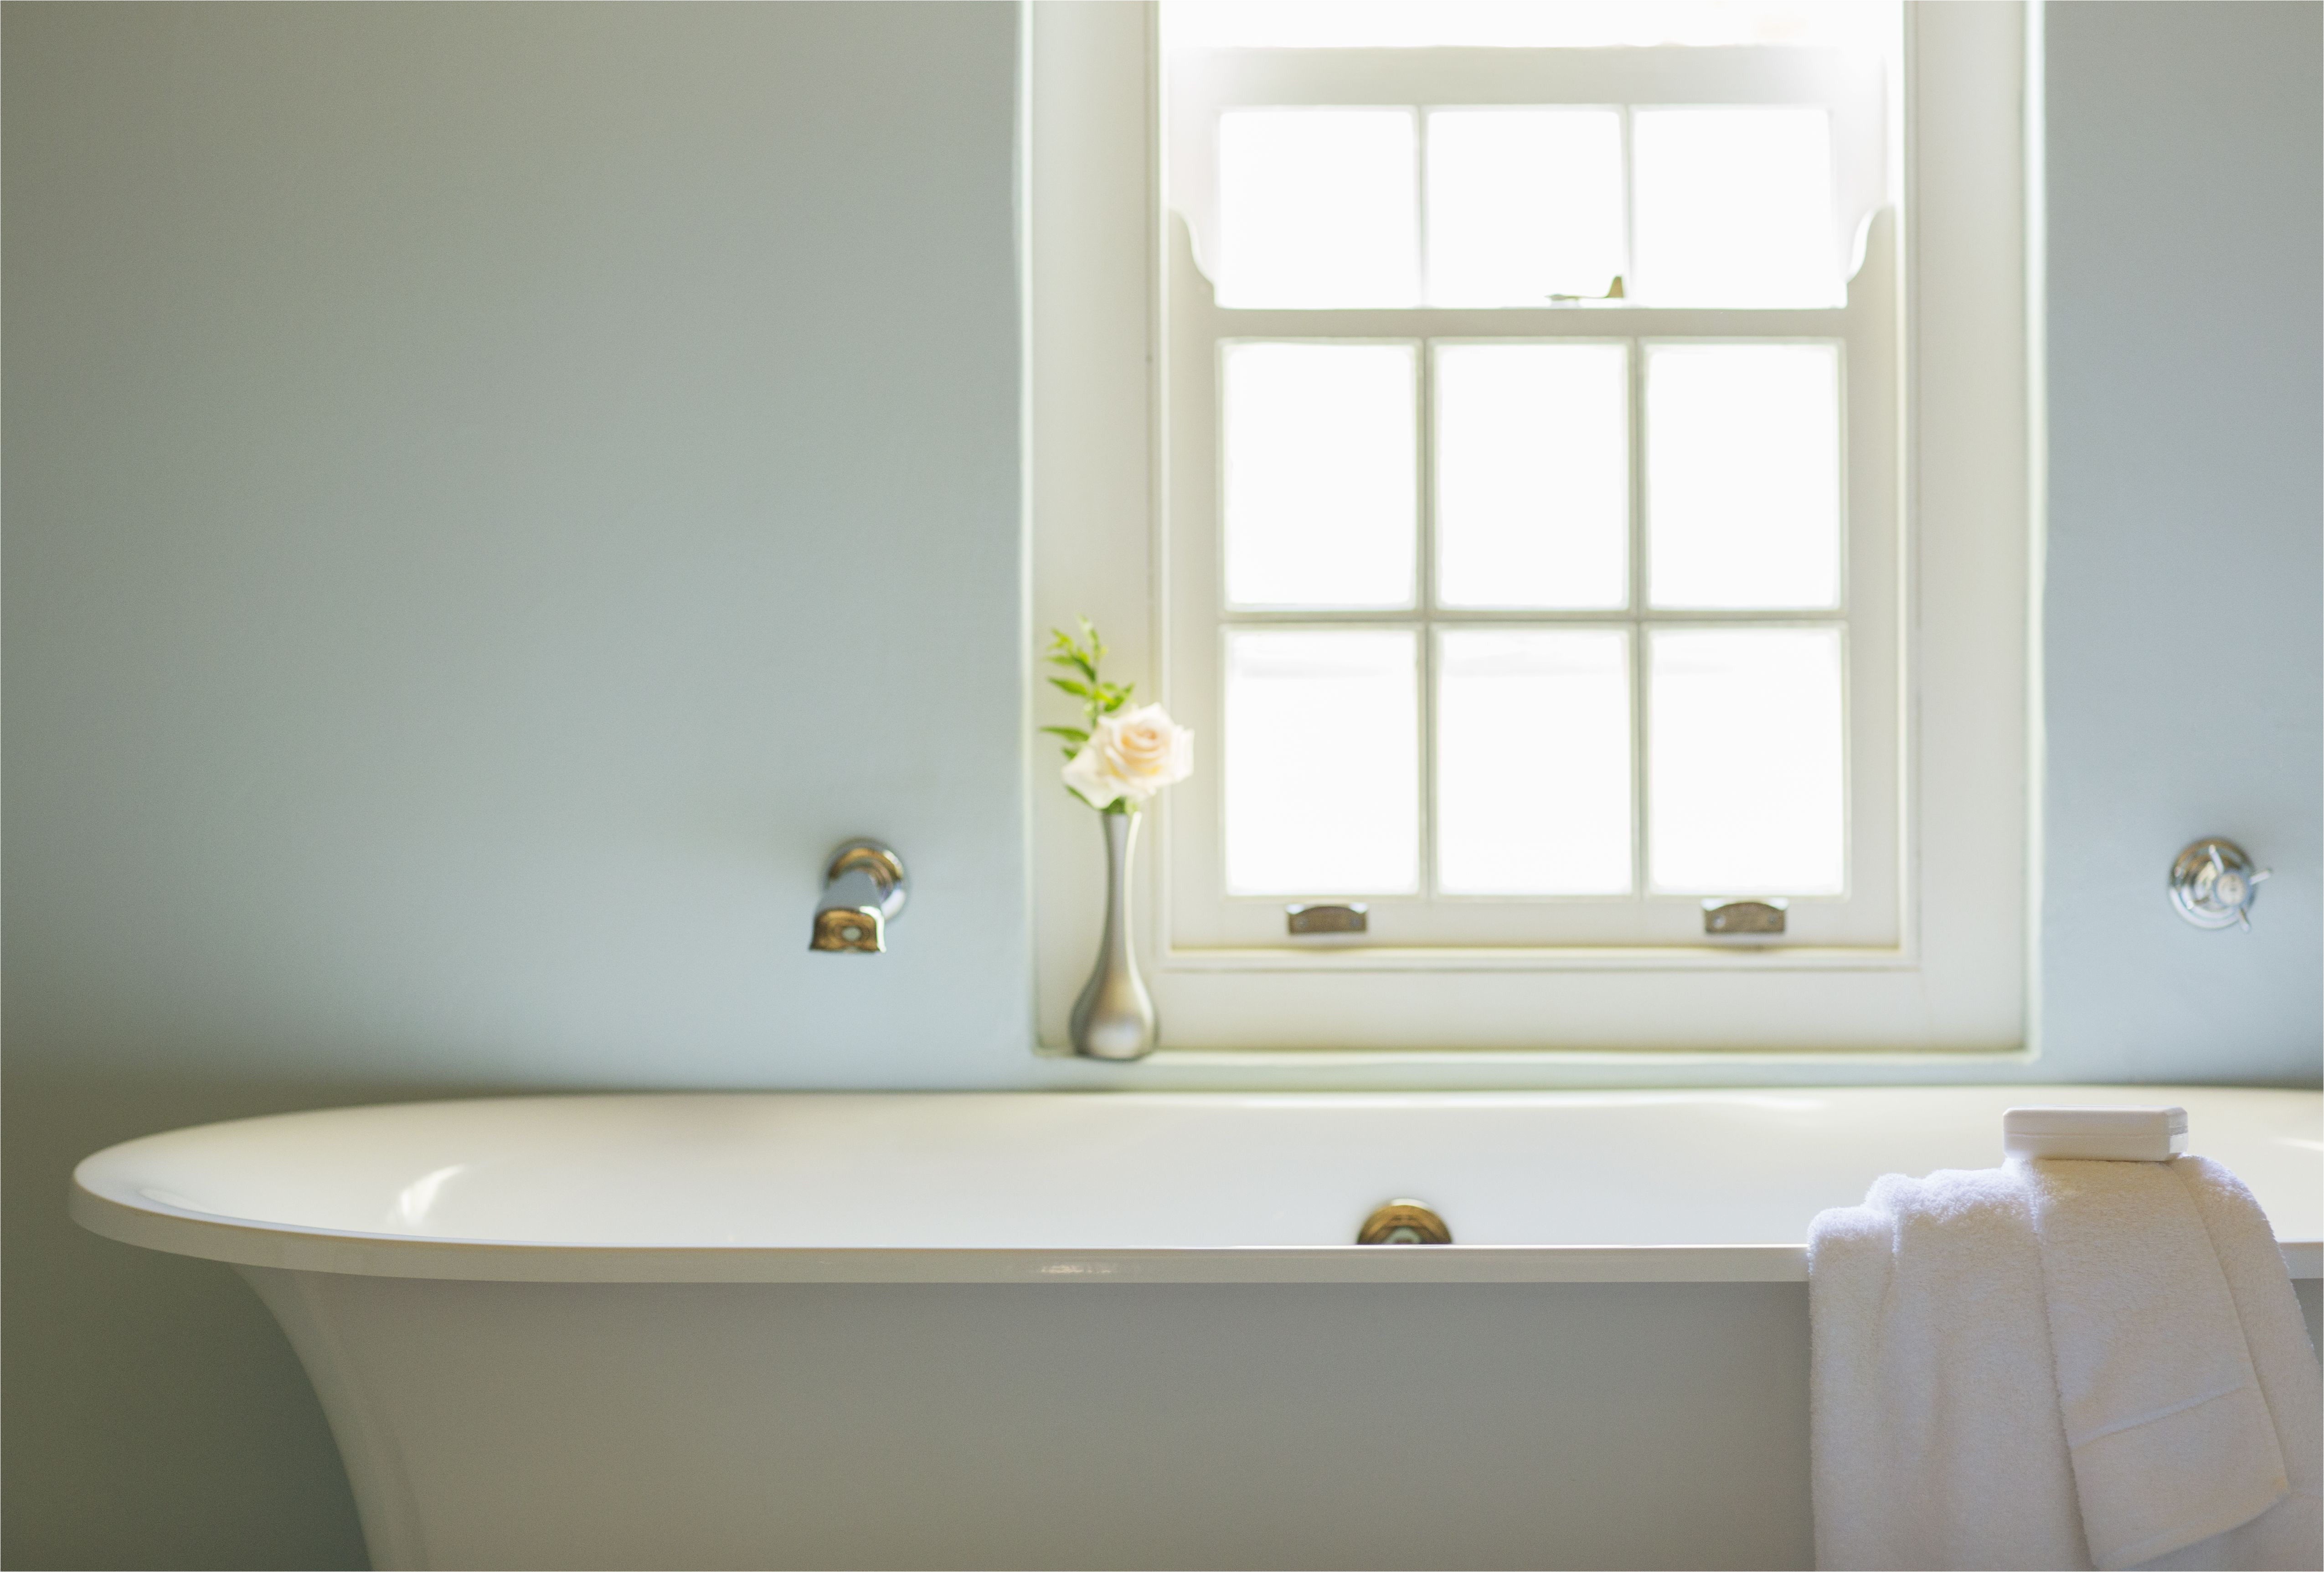 soaking tub below window in luxury bathroom 494358425 5aa1e931c064710037061882 jpg